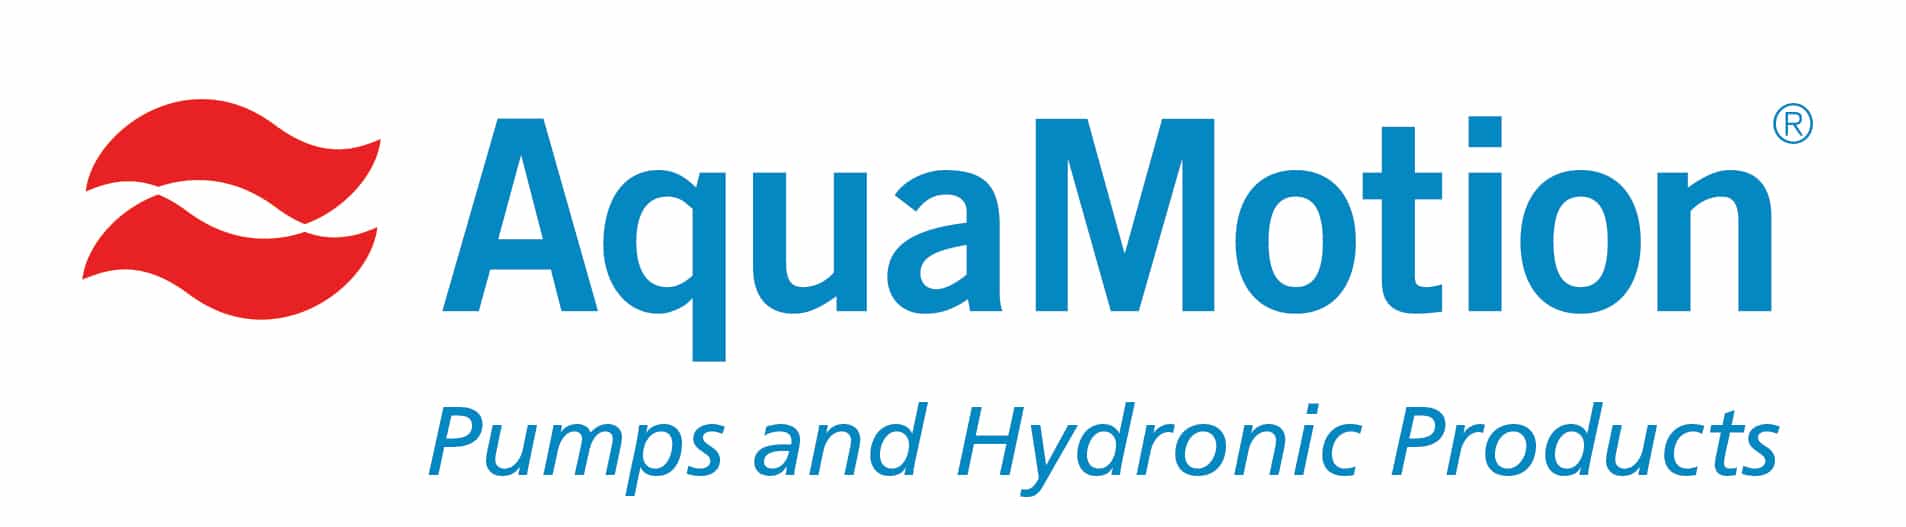 Aquamotion logo.jpg